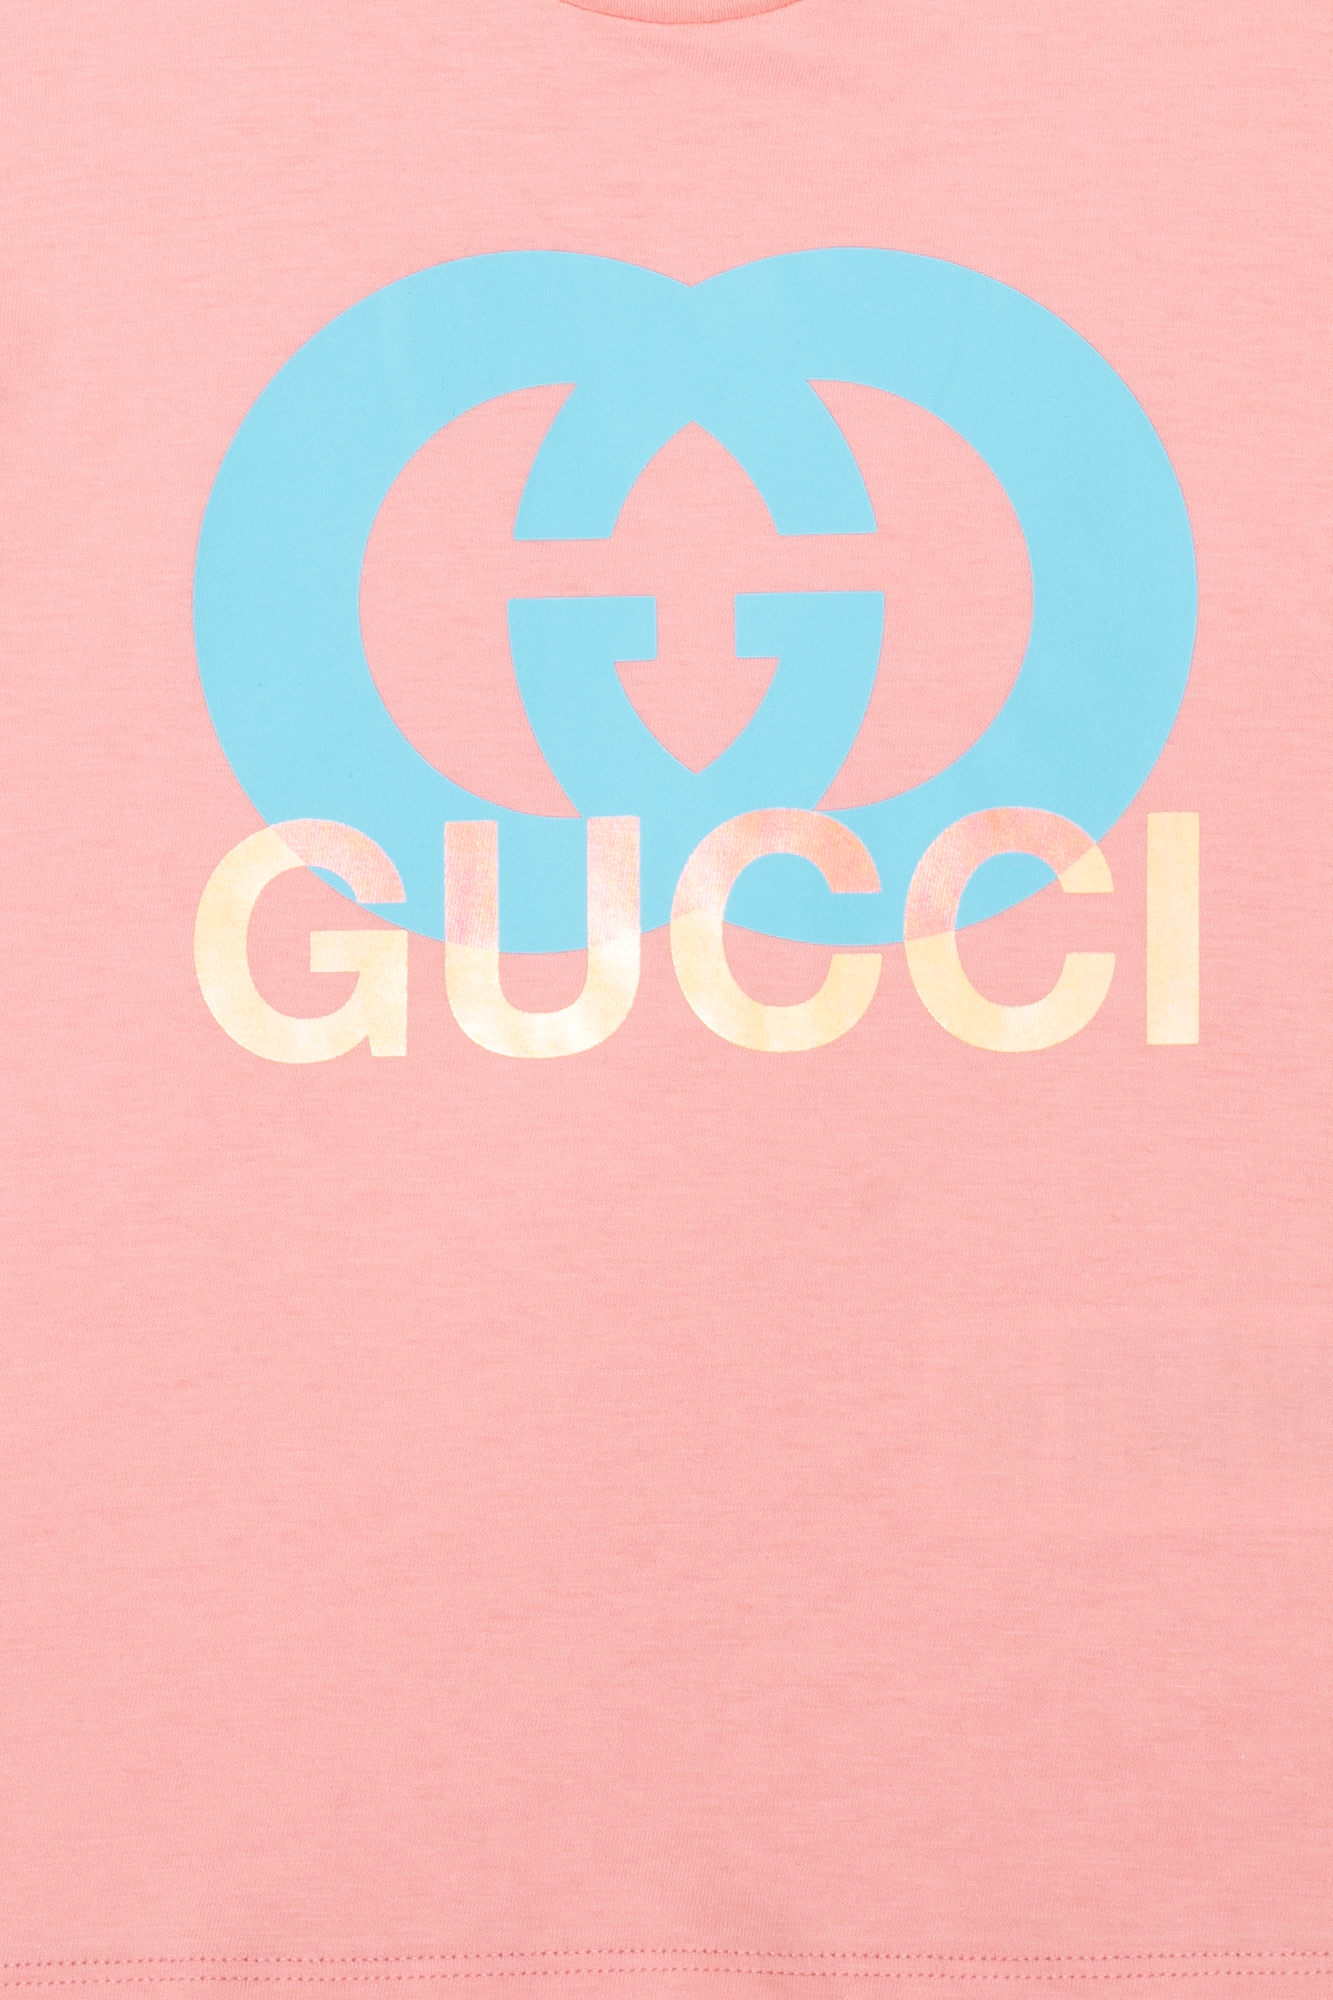 Gucci Kids Printed T-shirt